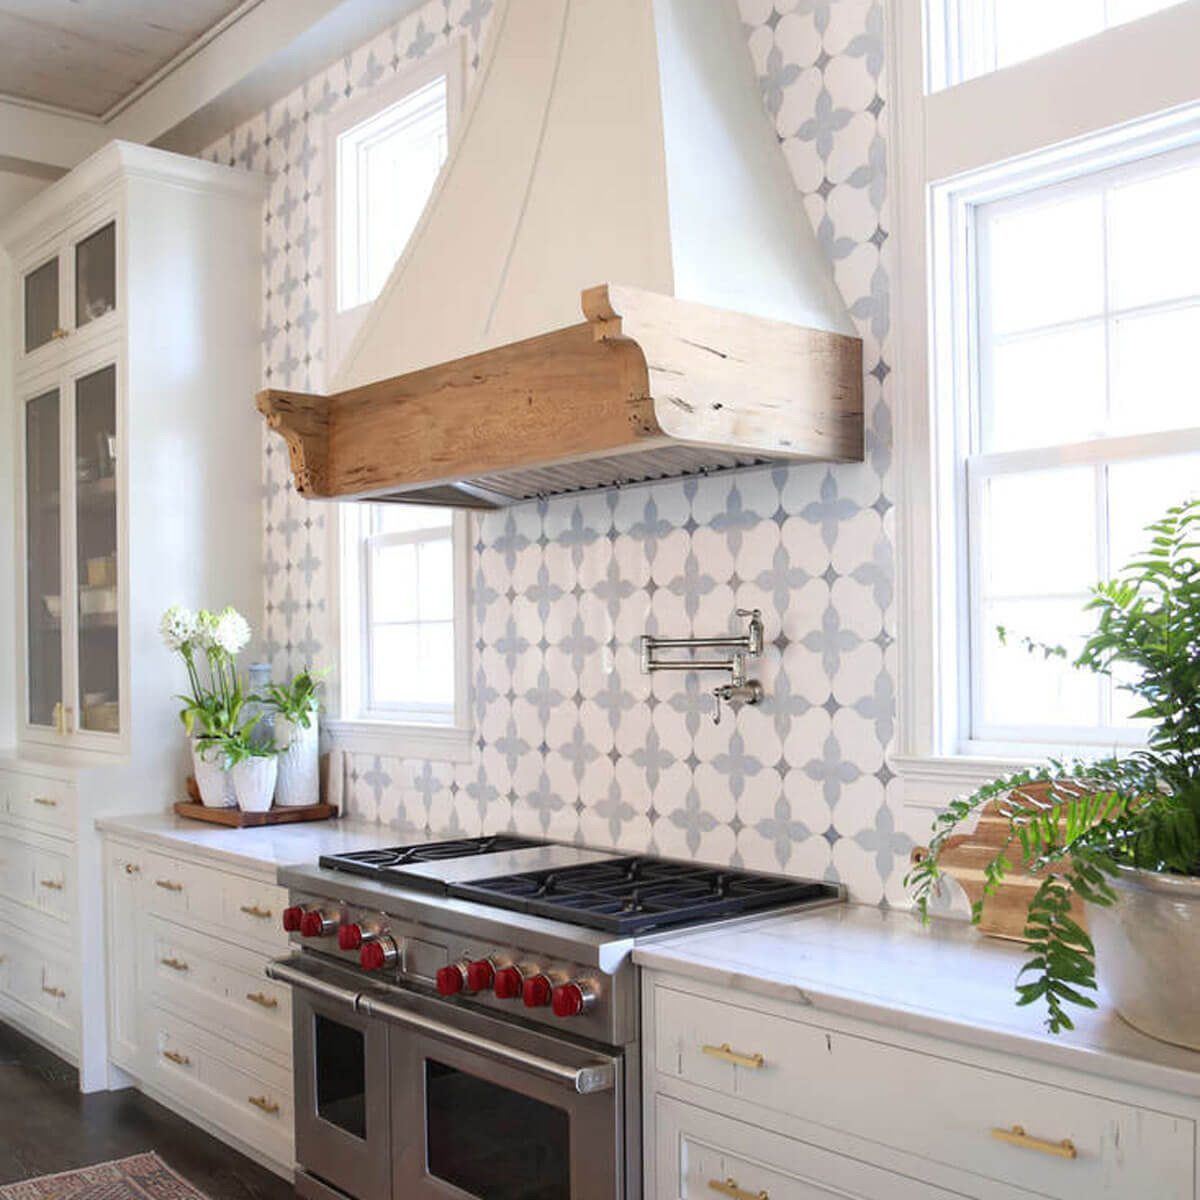 Kitchen Backsplash Idea Pictures
 14 Showstopping Tile Backsplash Ideas To Suit Any Style